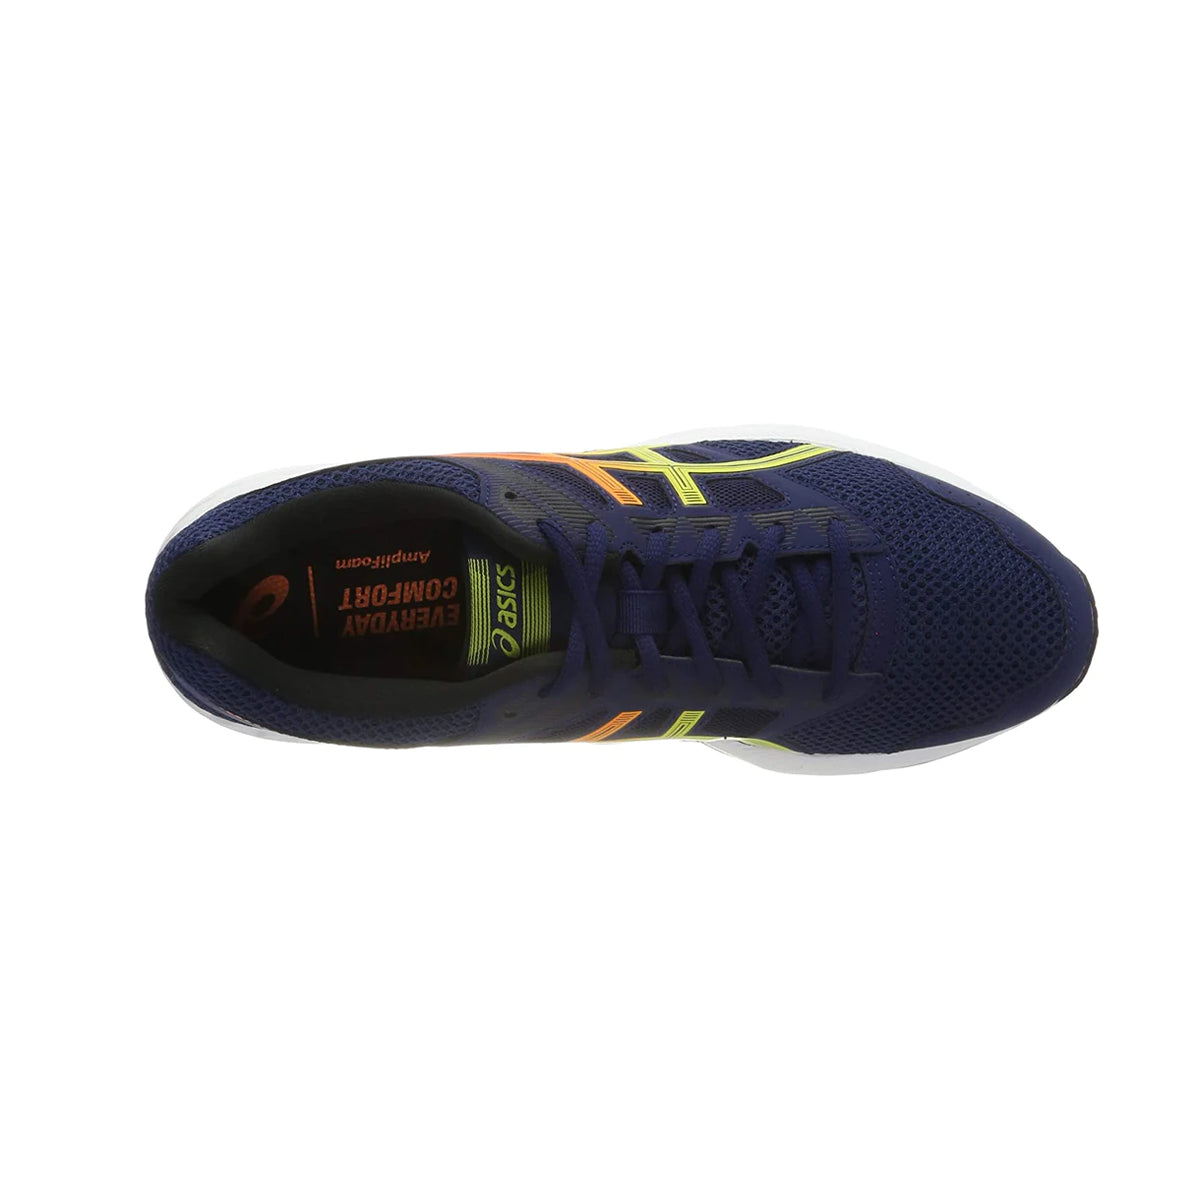 ASICS Men Gel-Contend 5 Running Shoes - Best Price online Prokicksports.com